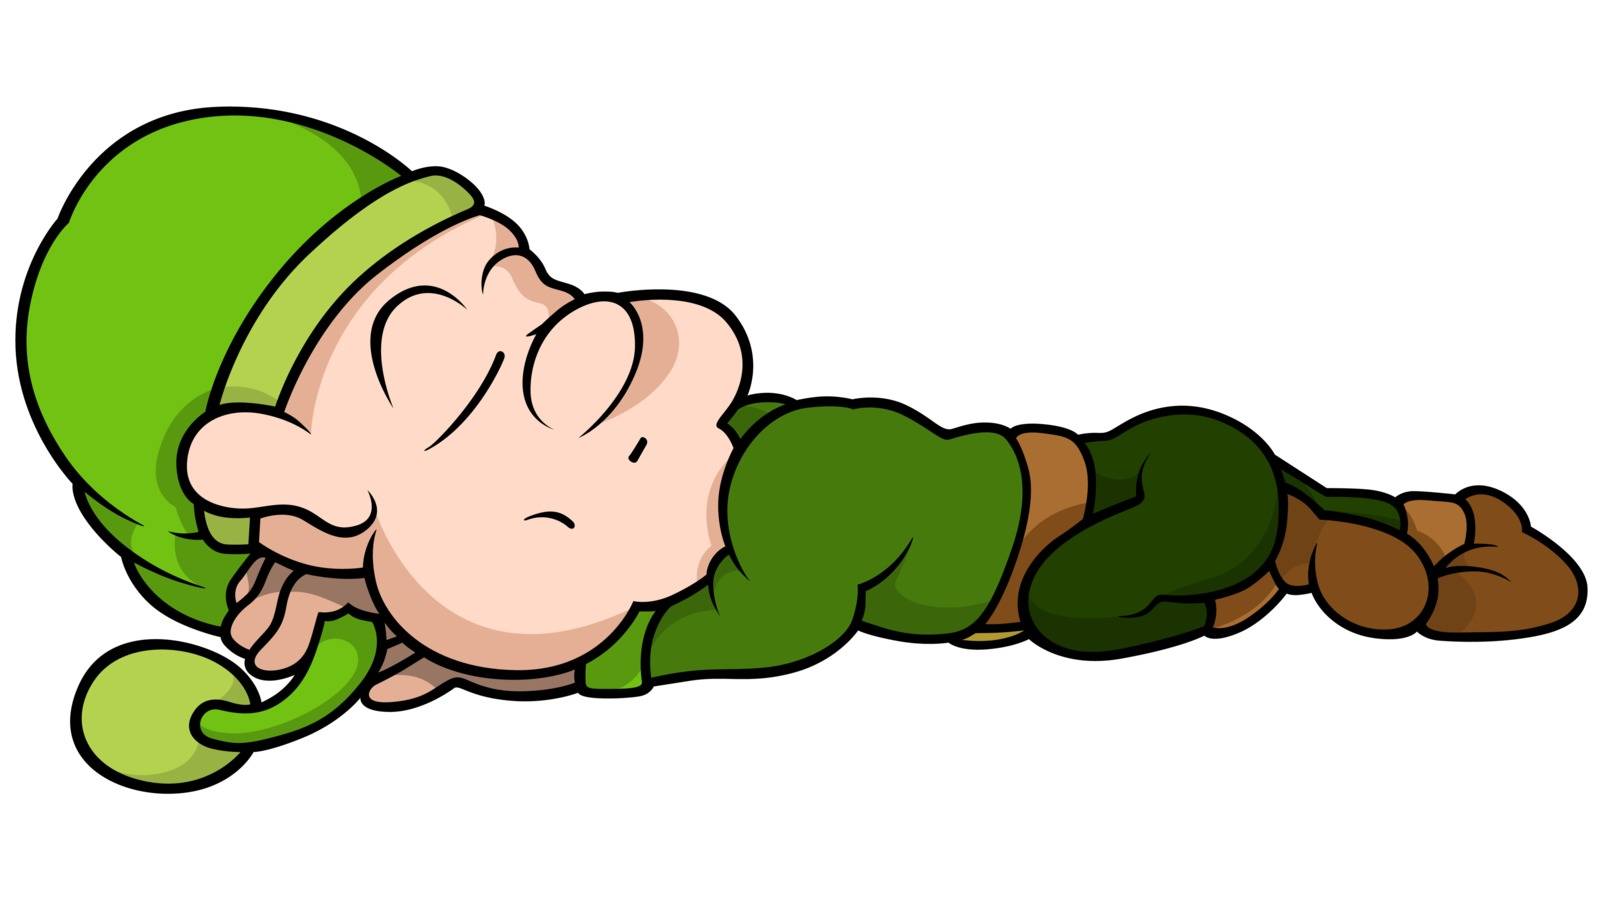 Green Dwarf Sleeping by illustratorCZ